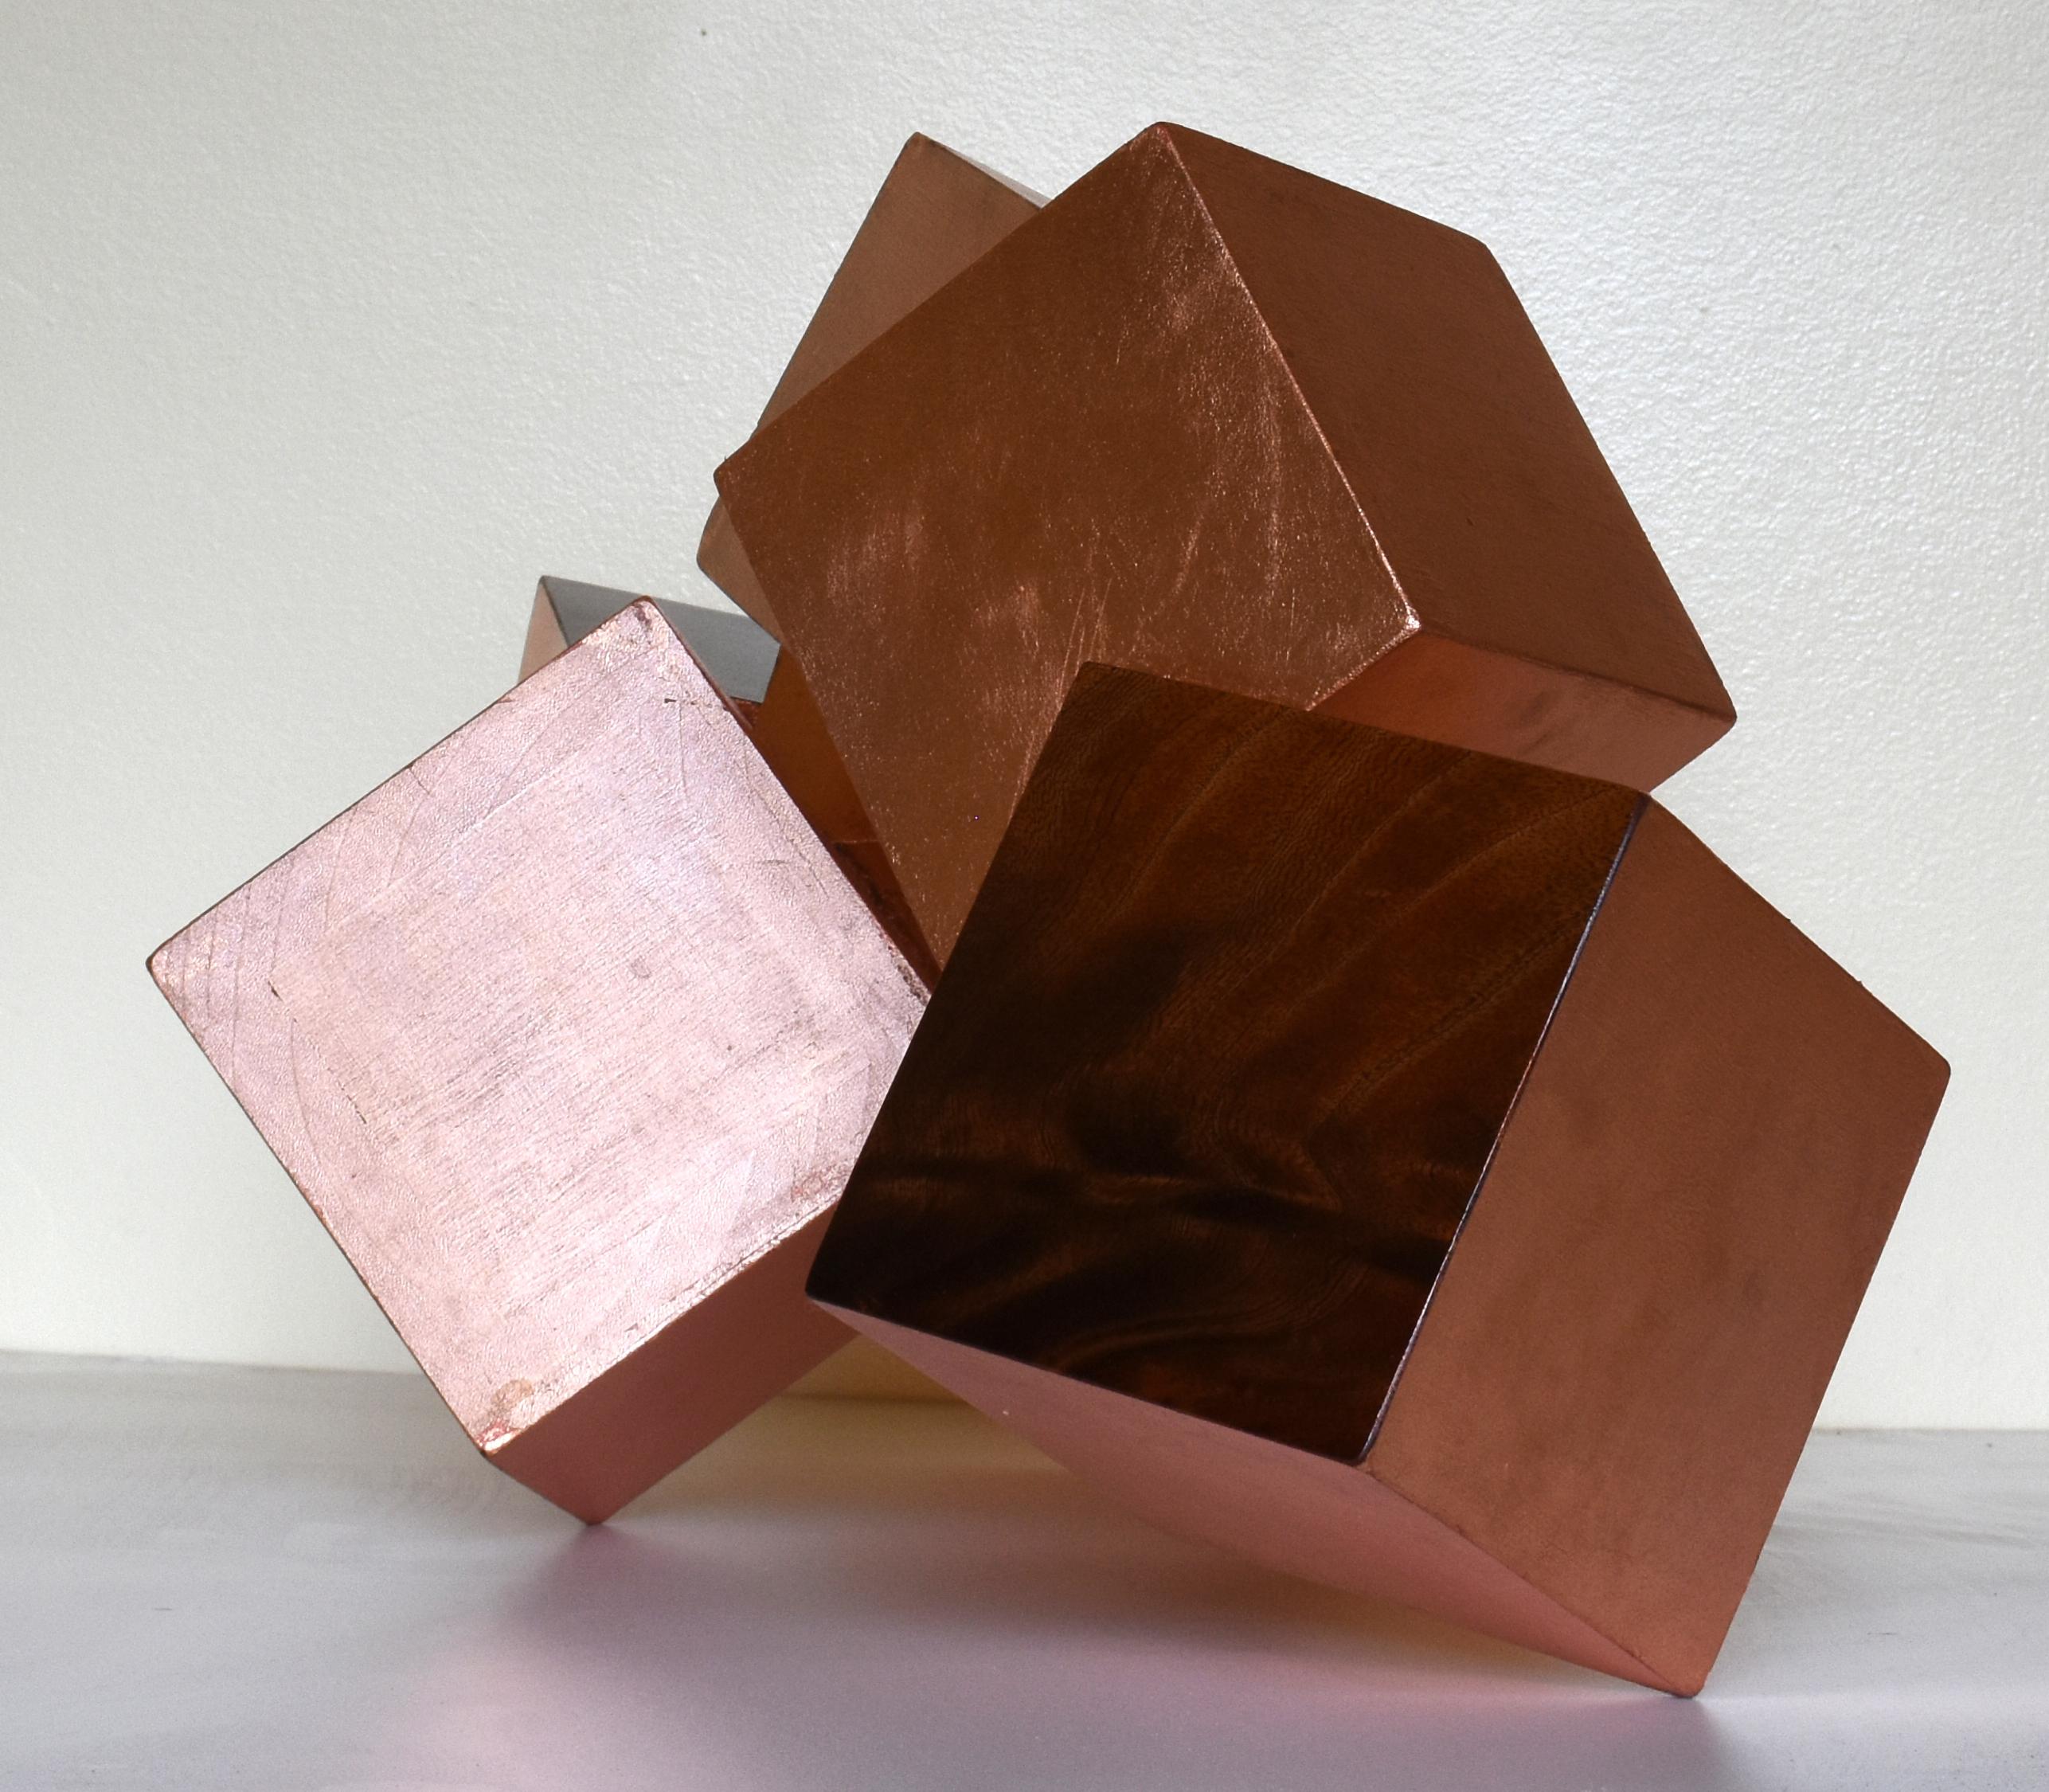 Copper and Mahogany Pyrite (exotic wood, metallic, cubic, table top sculpture) 14